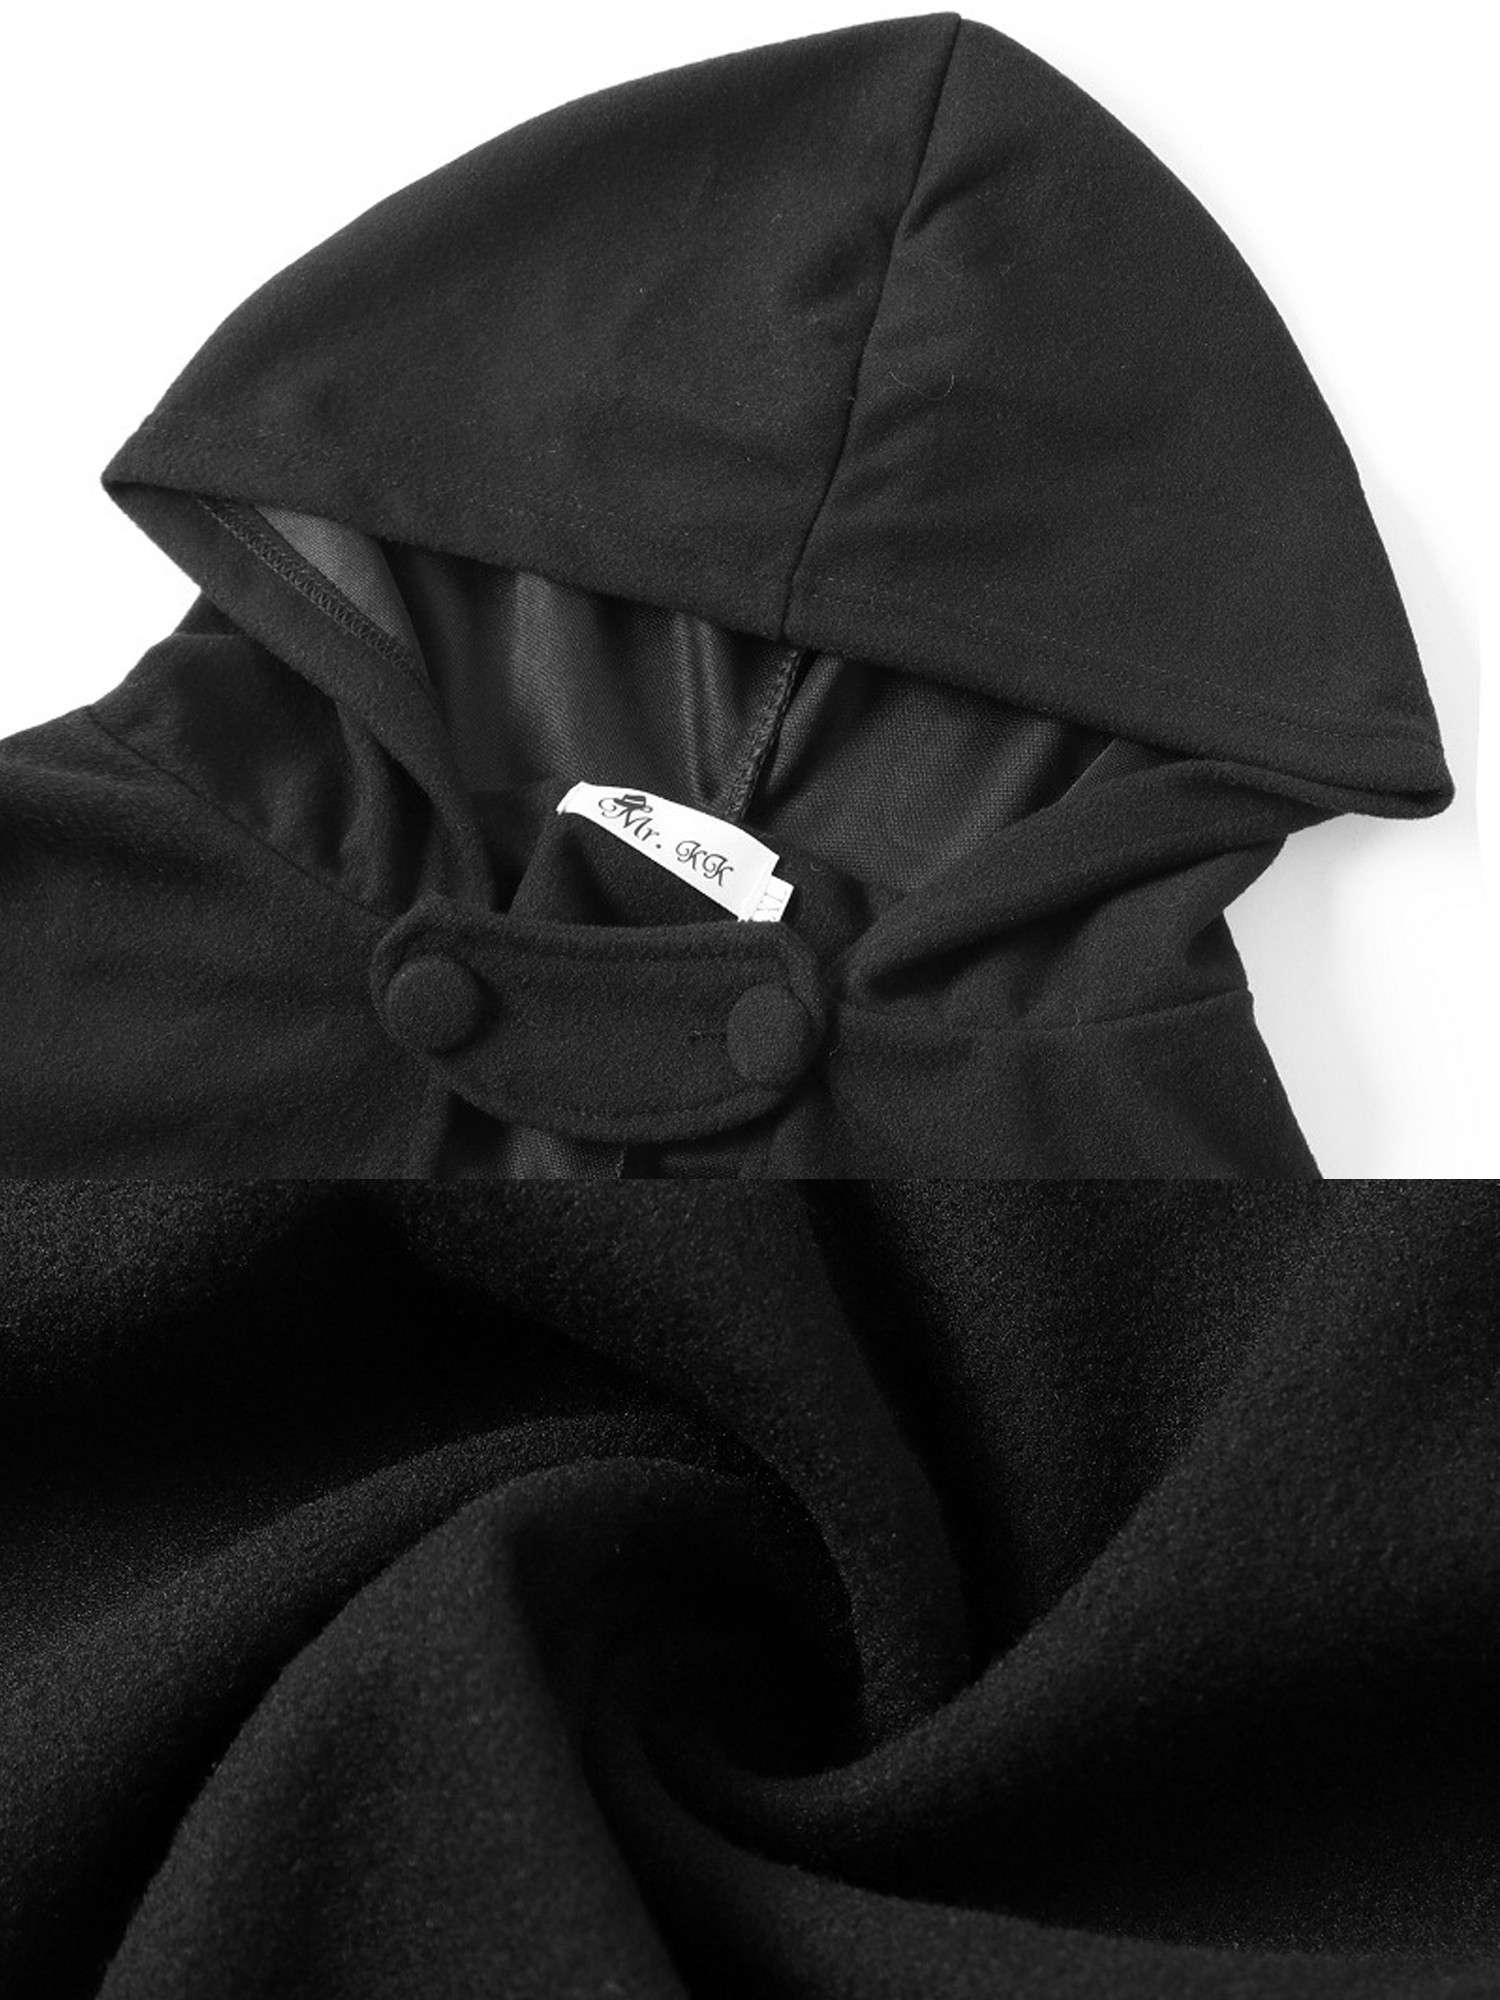 Aunavey Women's Hood Cape Bridal Wedding Cloak Open Front Poncho Shawl Long Coat - image 4 of 6